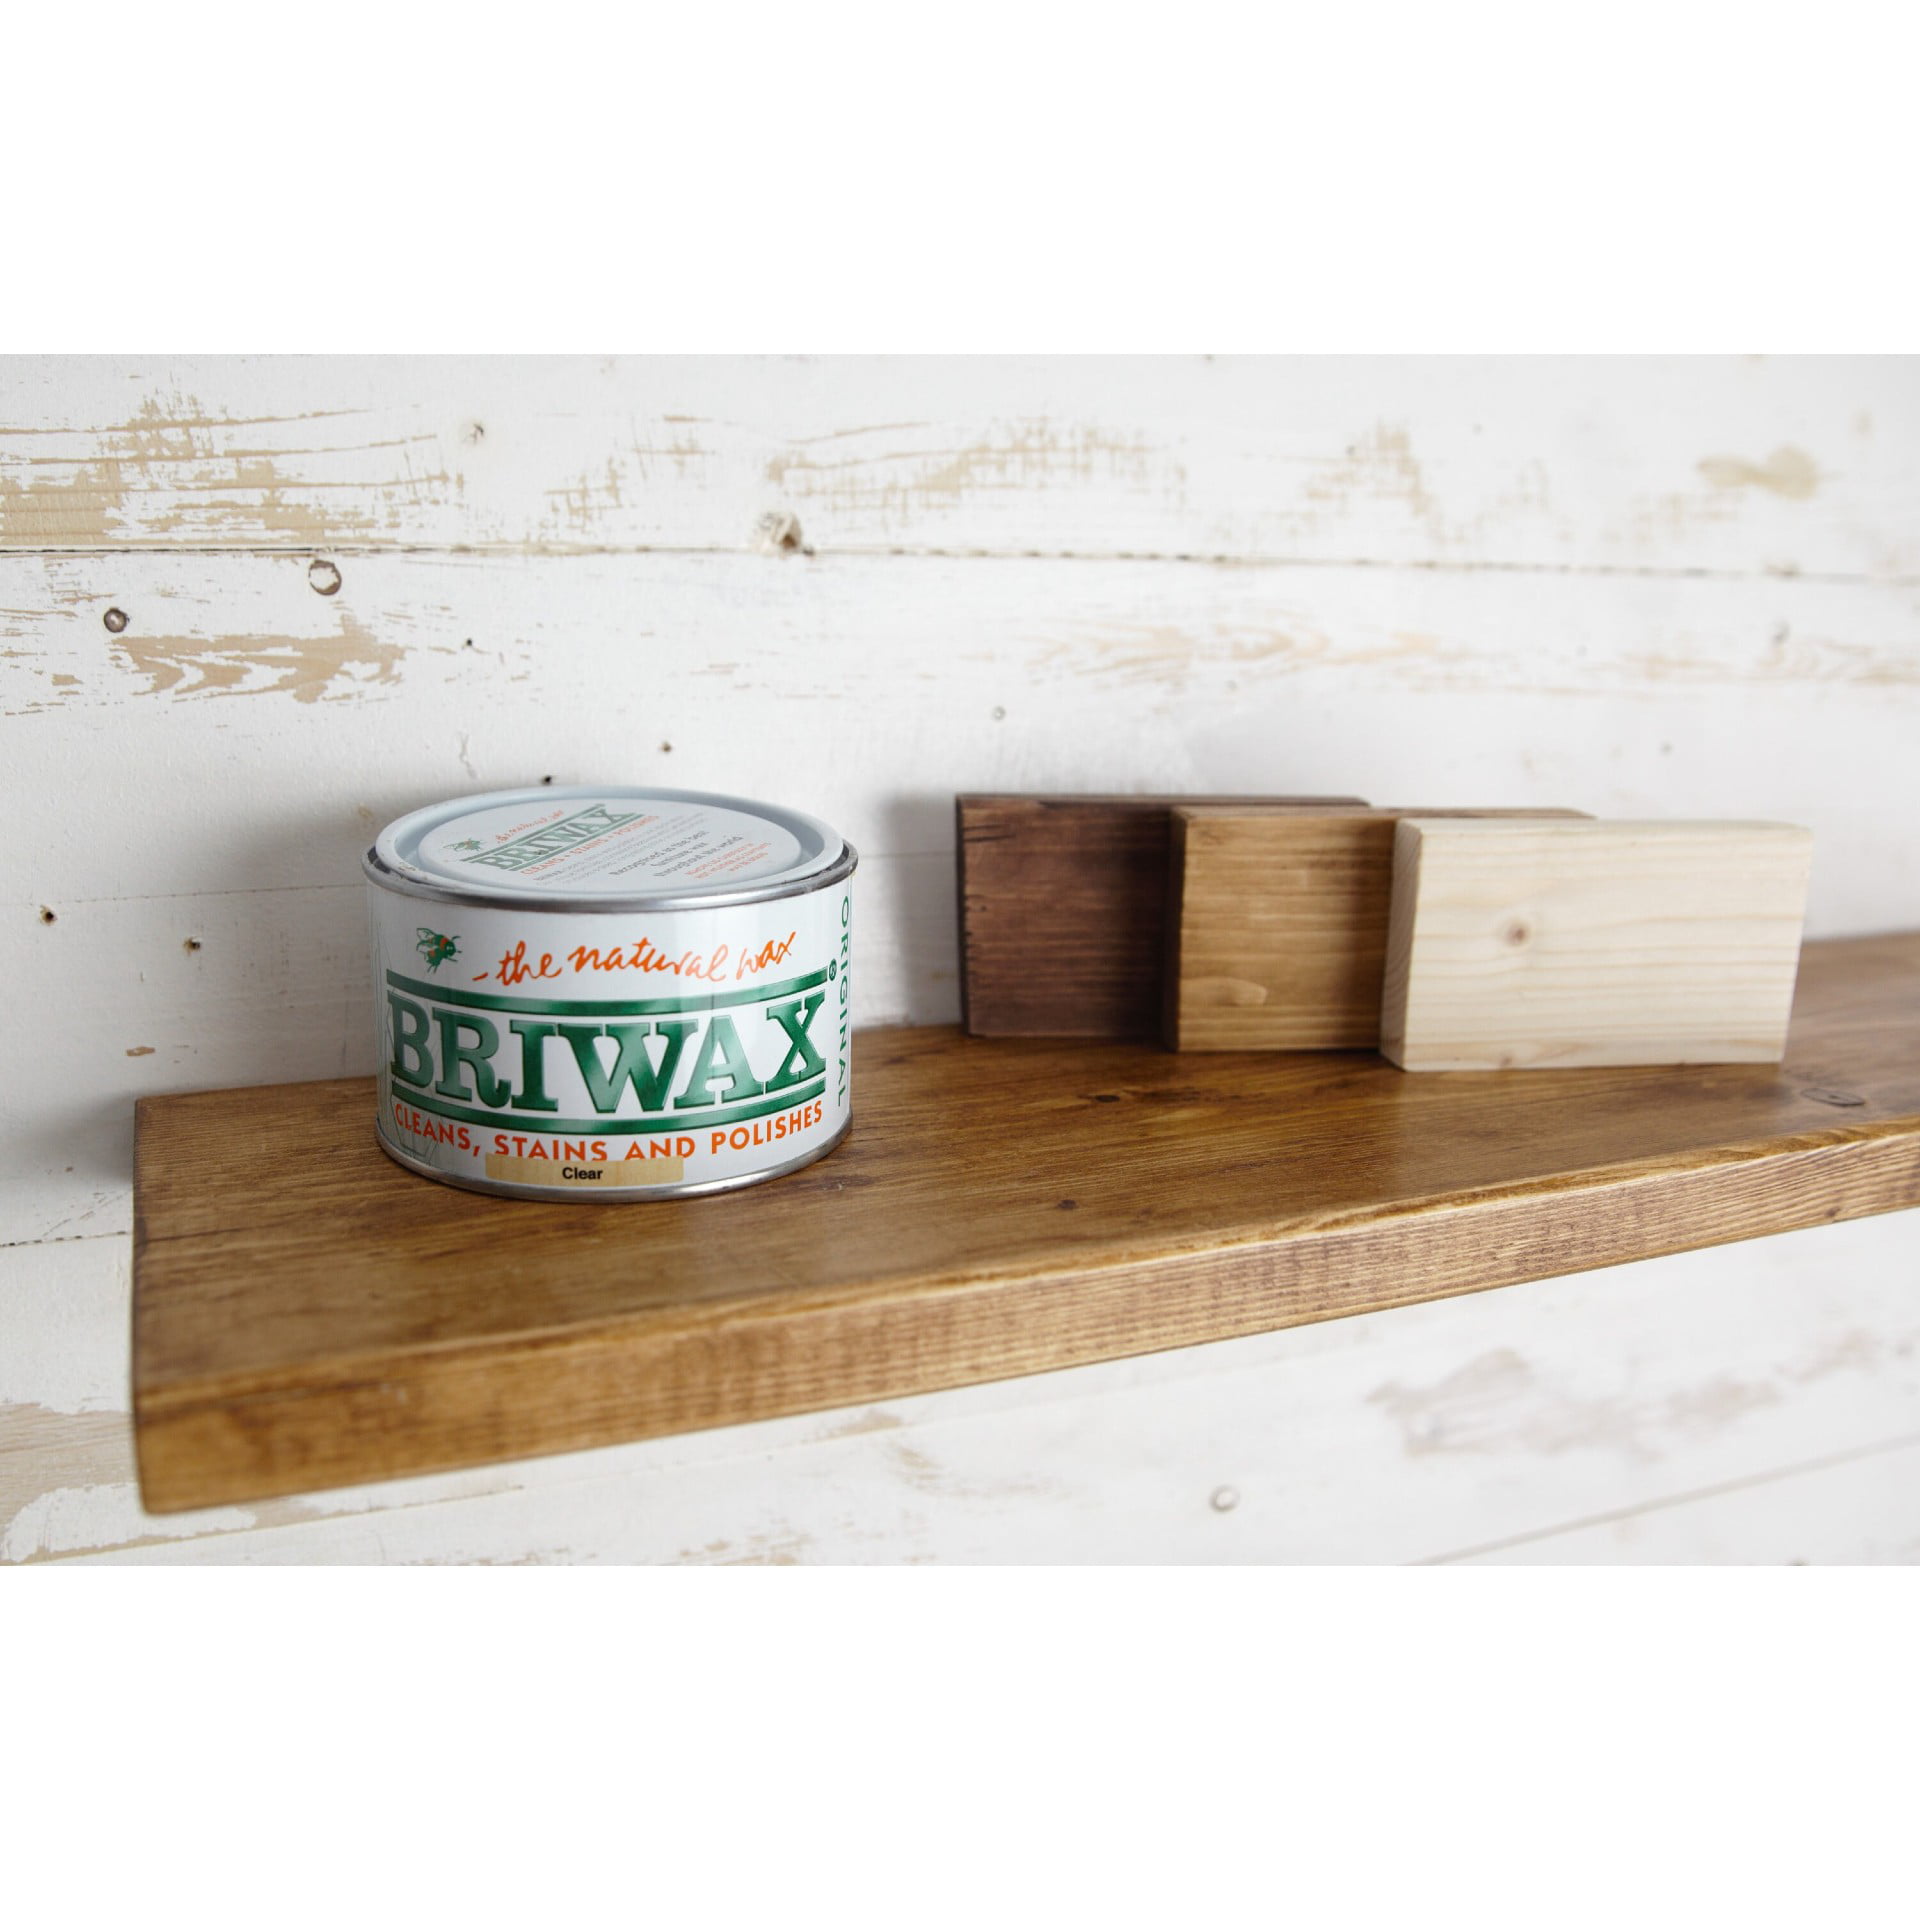 Briwax (Light Brown) Furniture Wax Polish, Cleans, Stains, and Polishe —  CHIMIYA